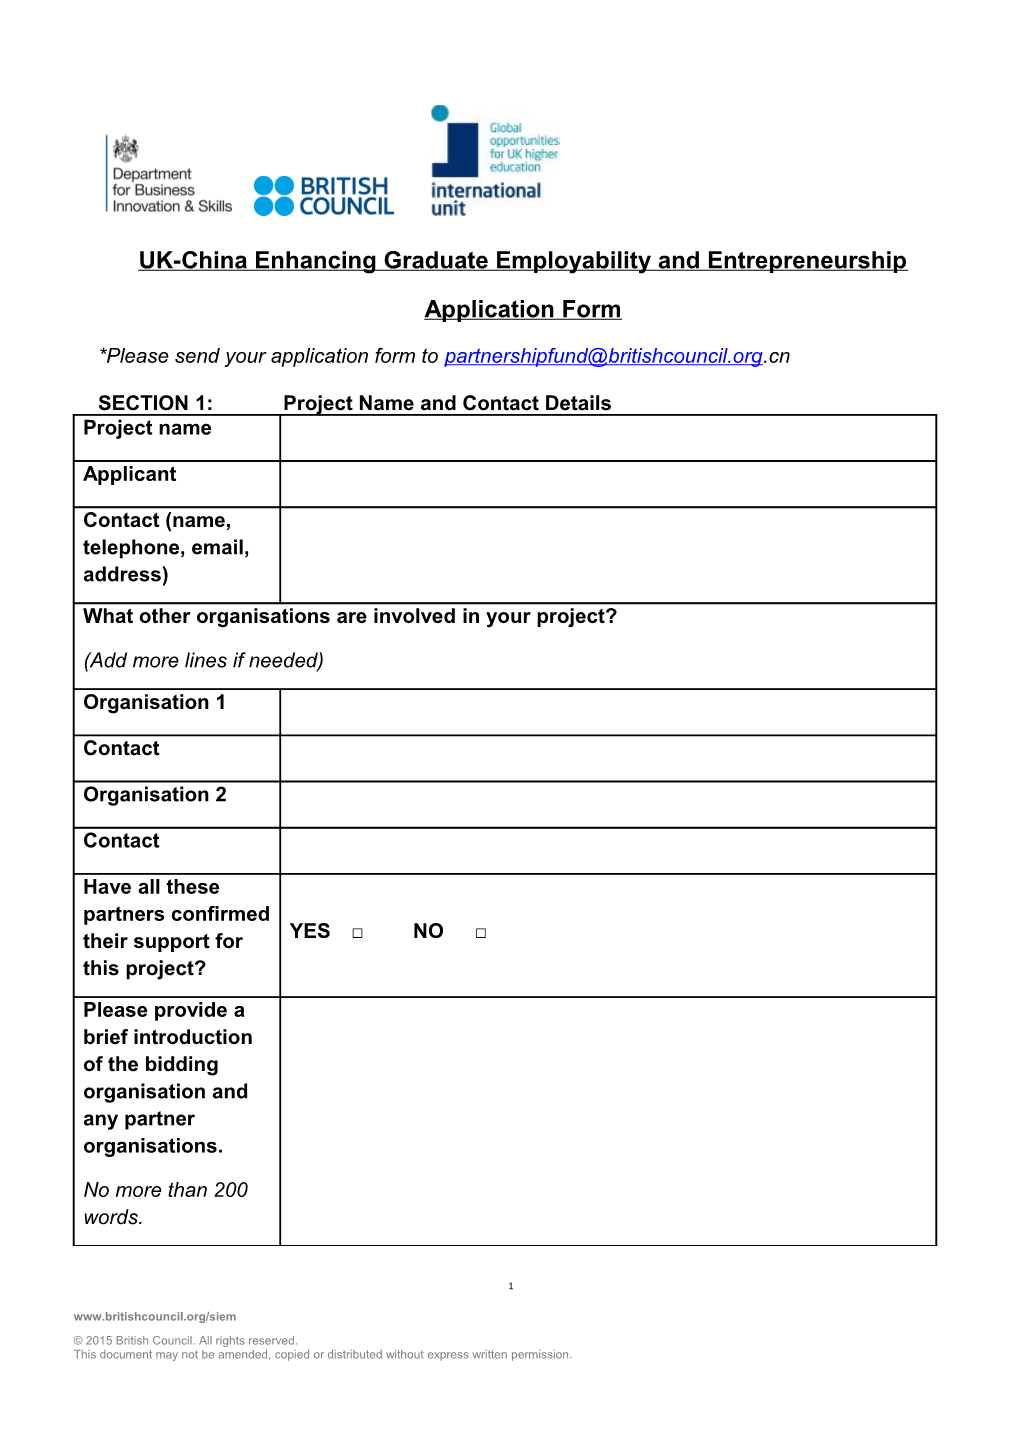 UK-China Partnership Innovation Challenge Fund Application Form